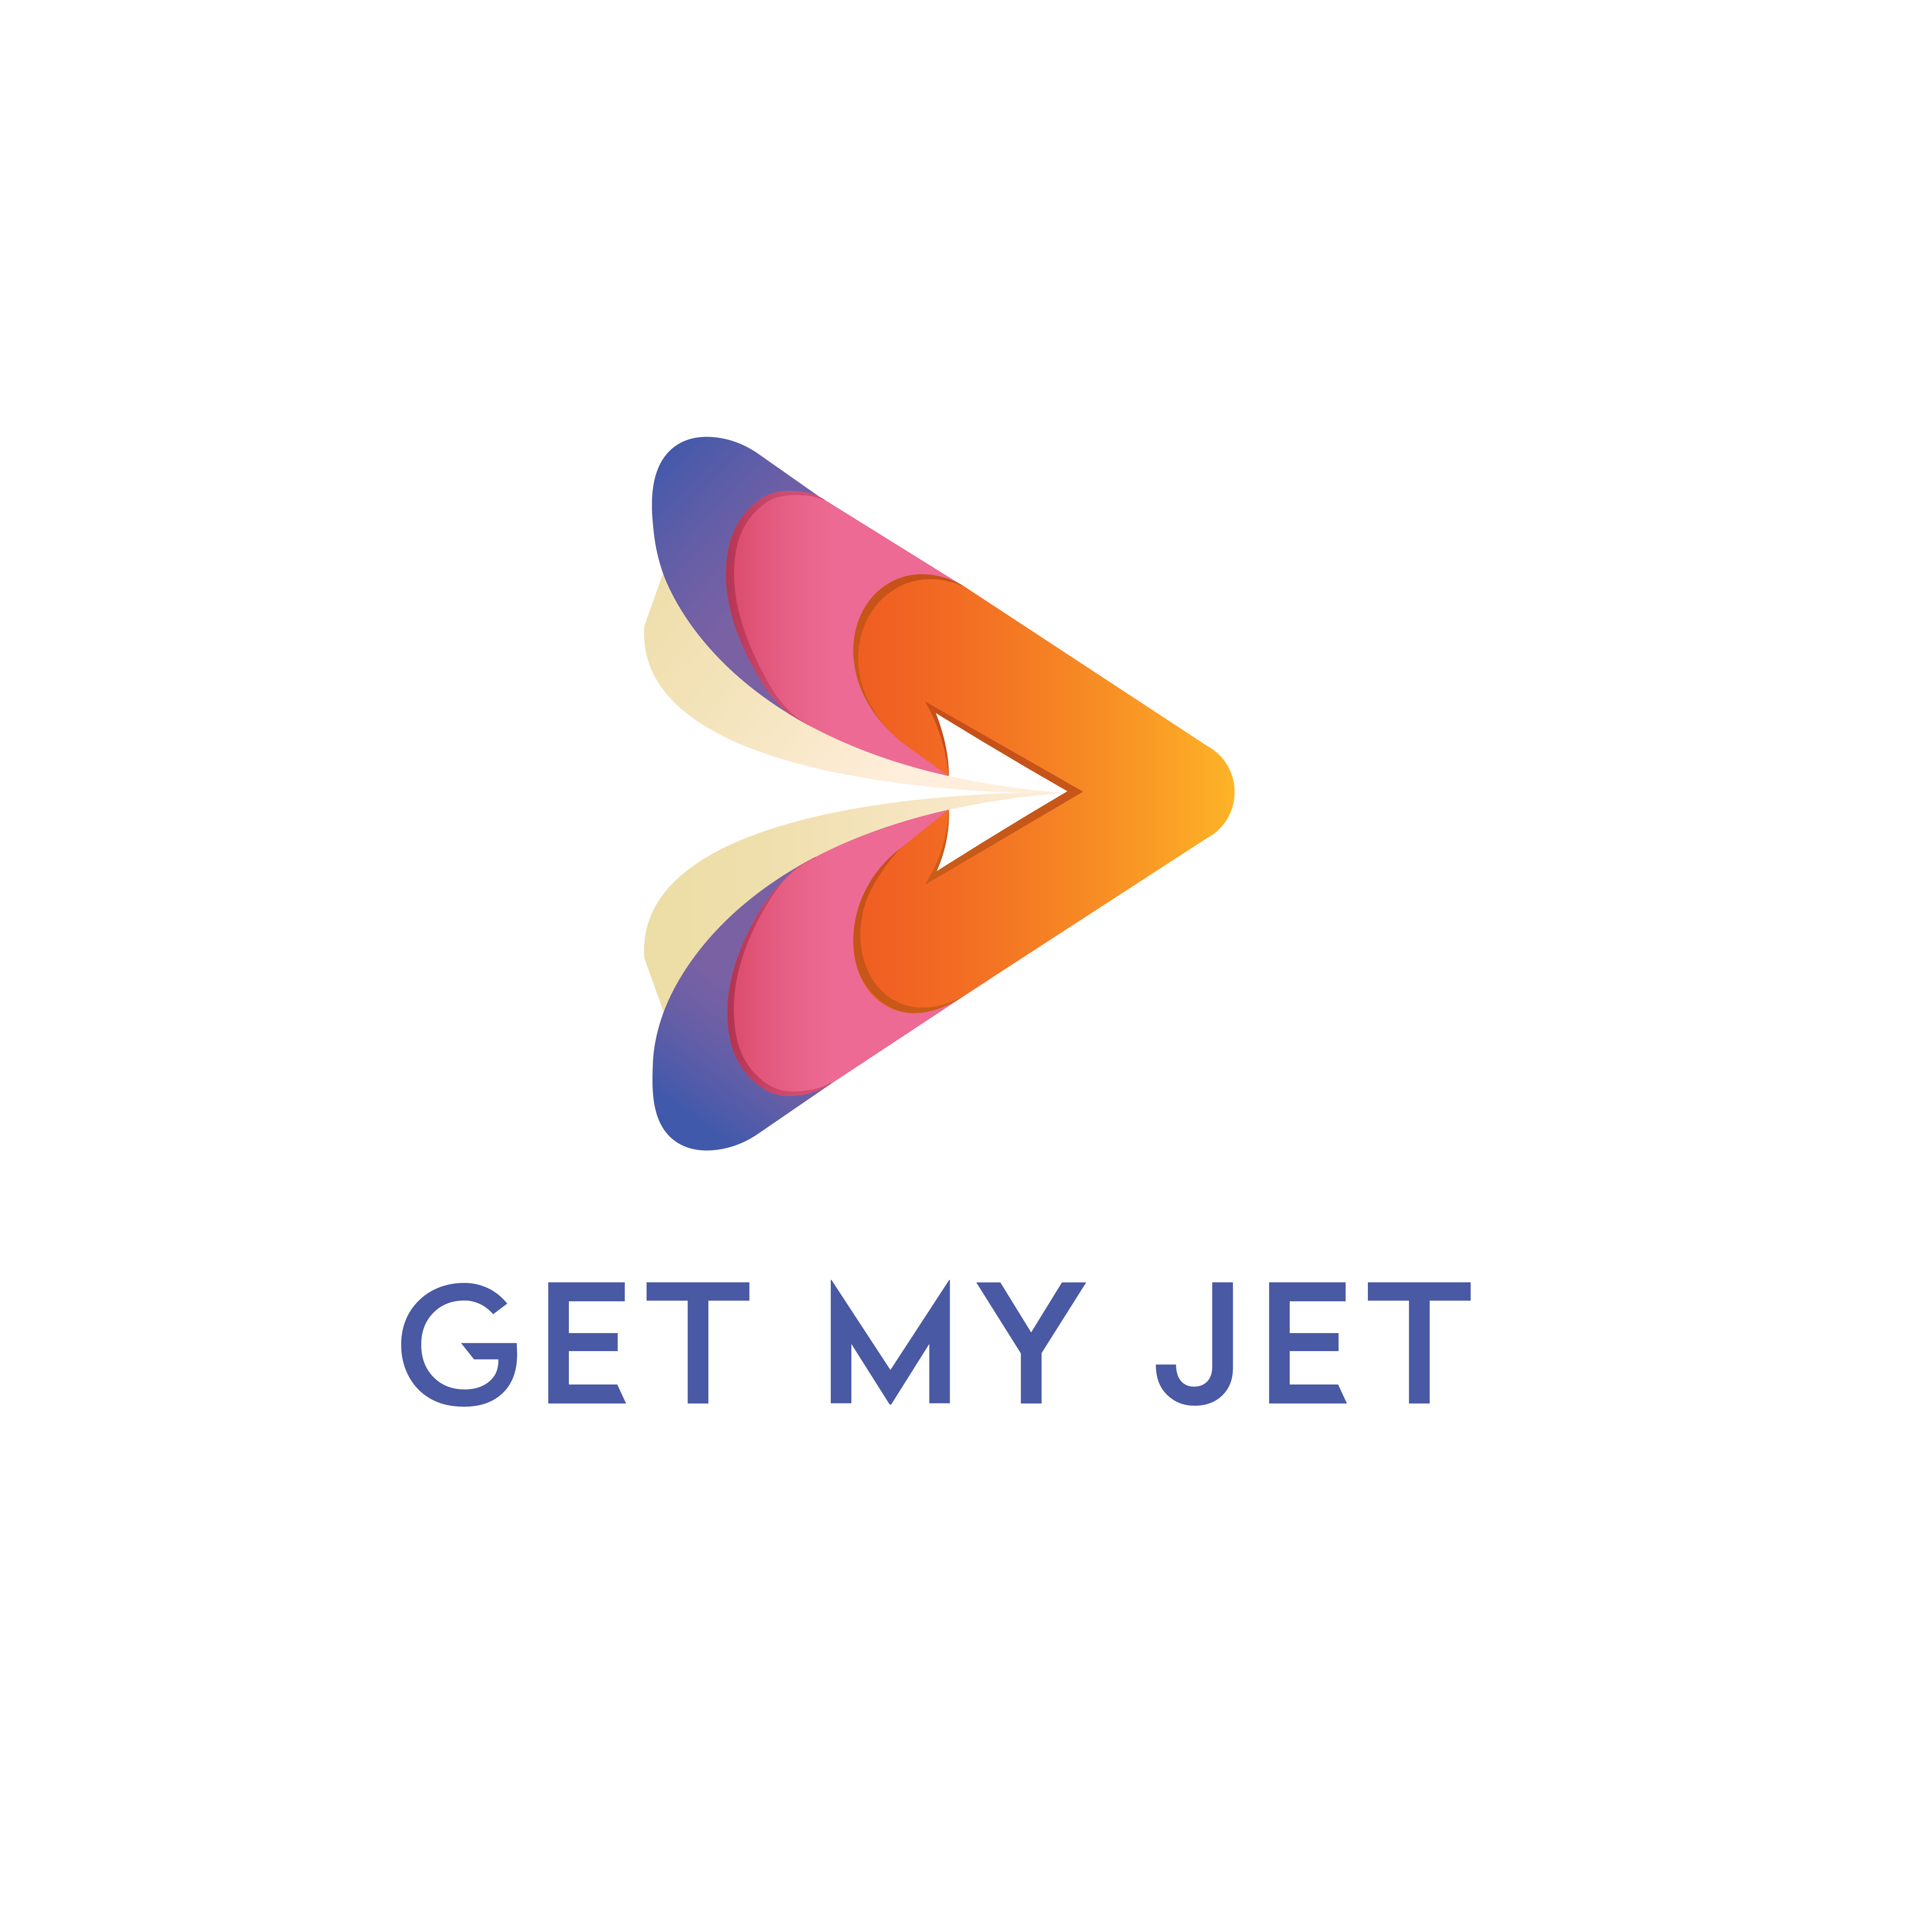 Get my jet